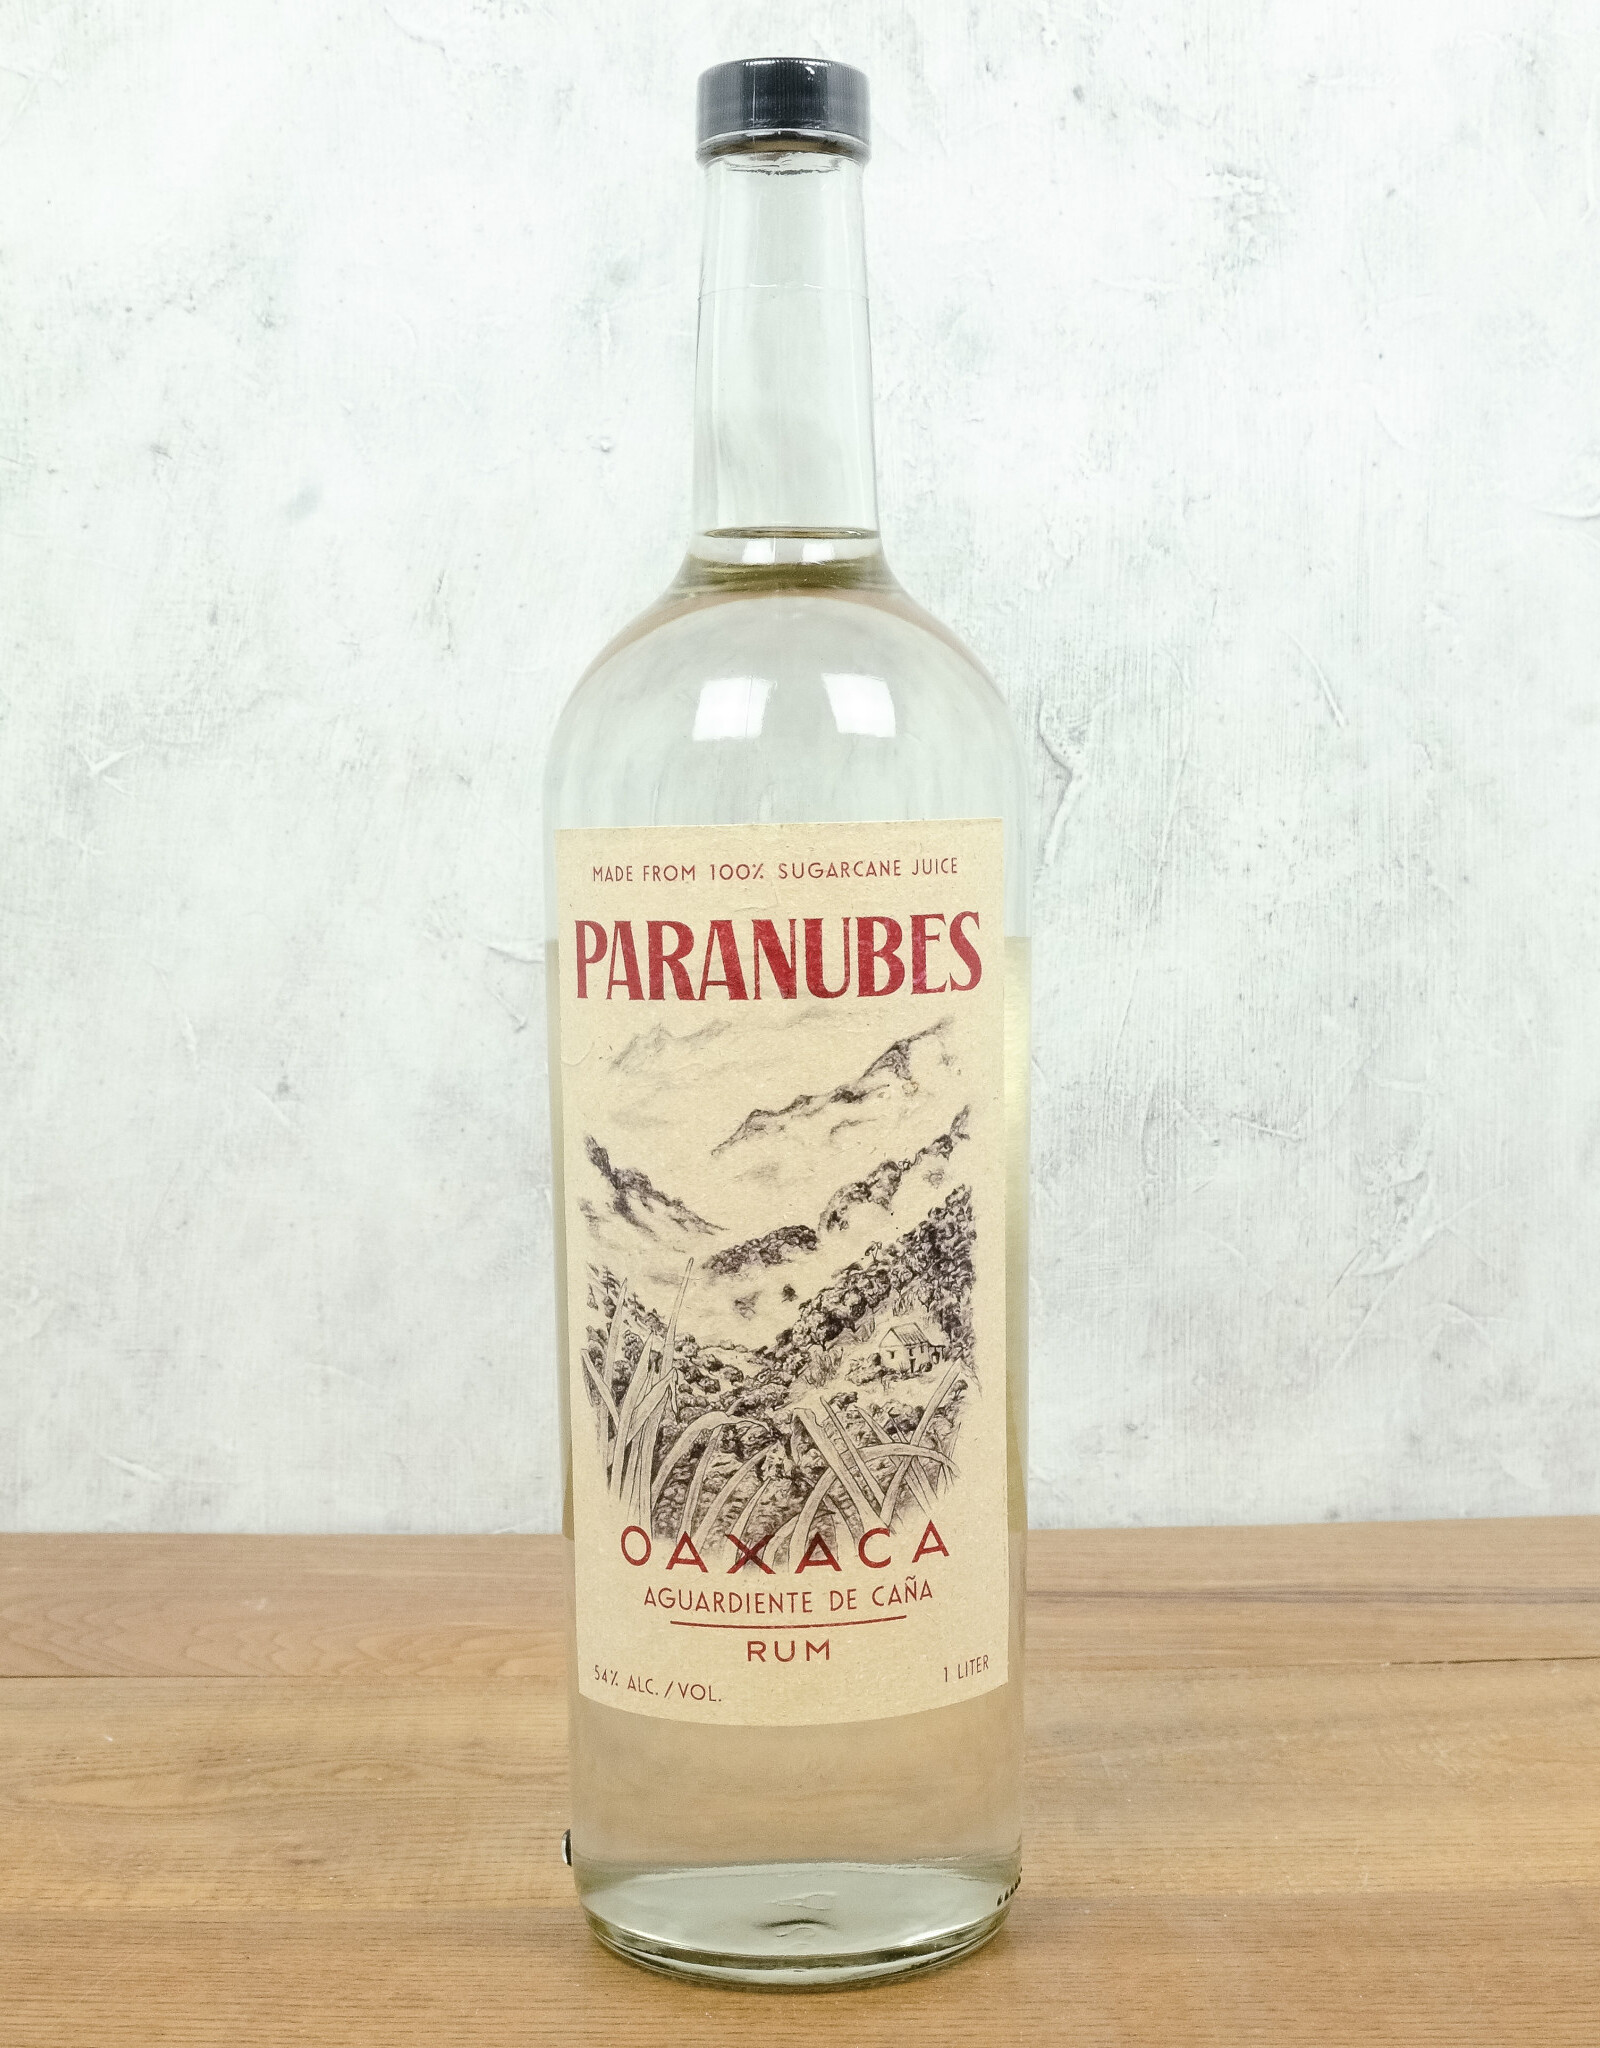 Paranubes Oaxacan Rum